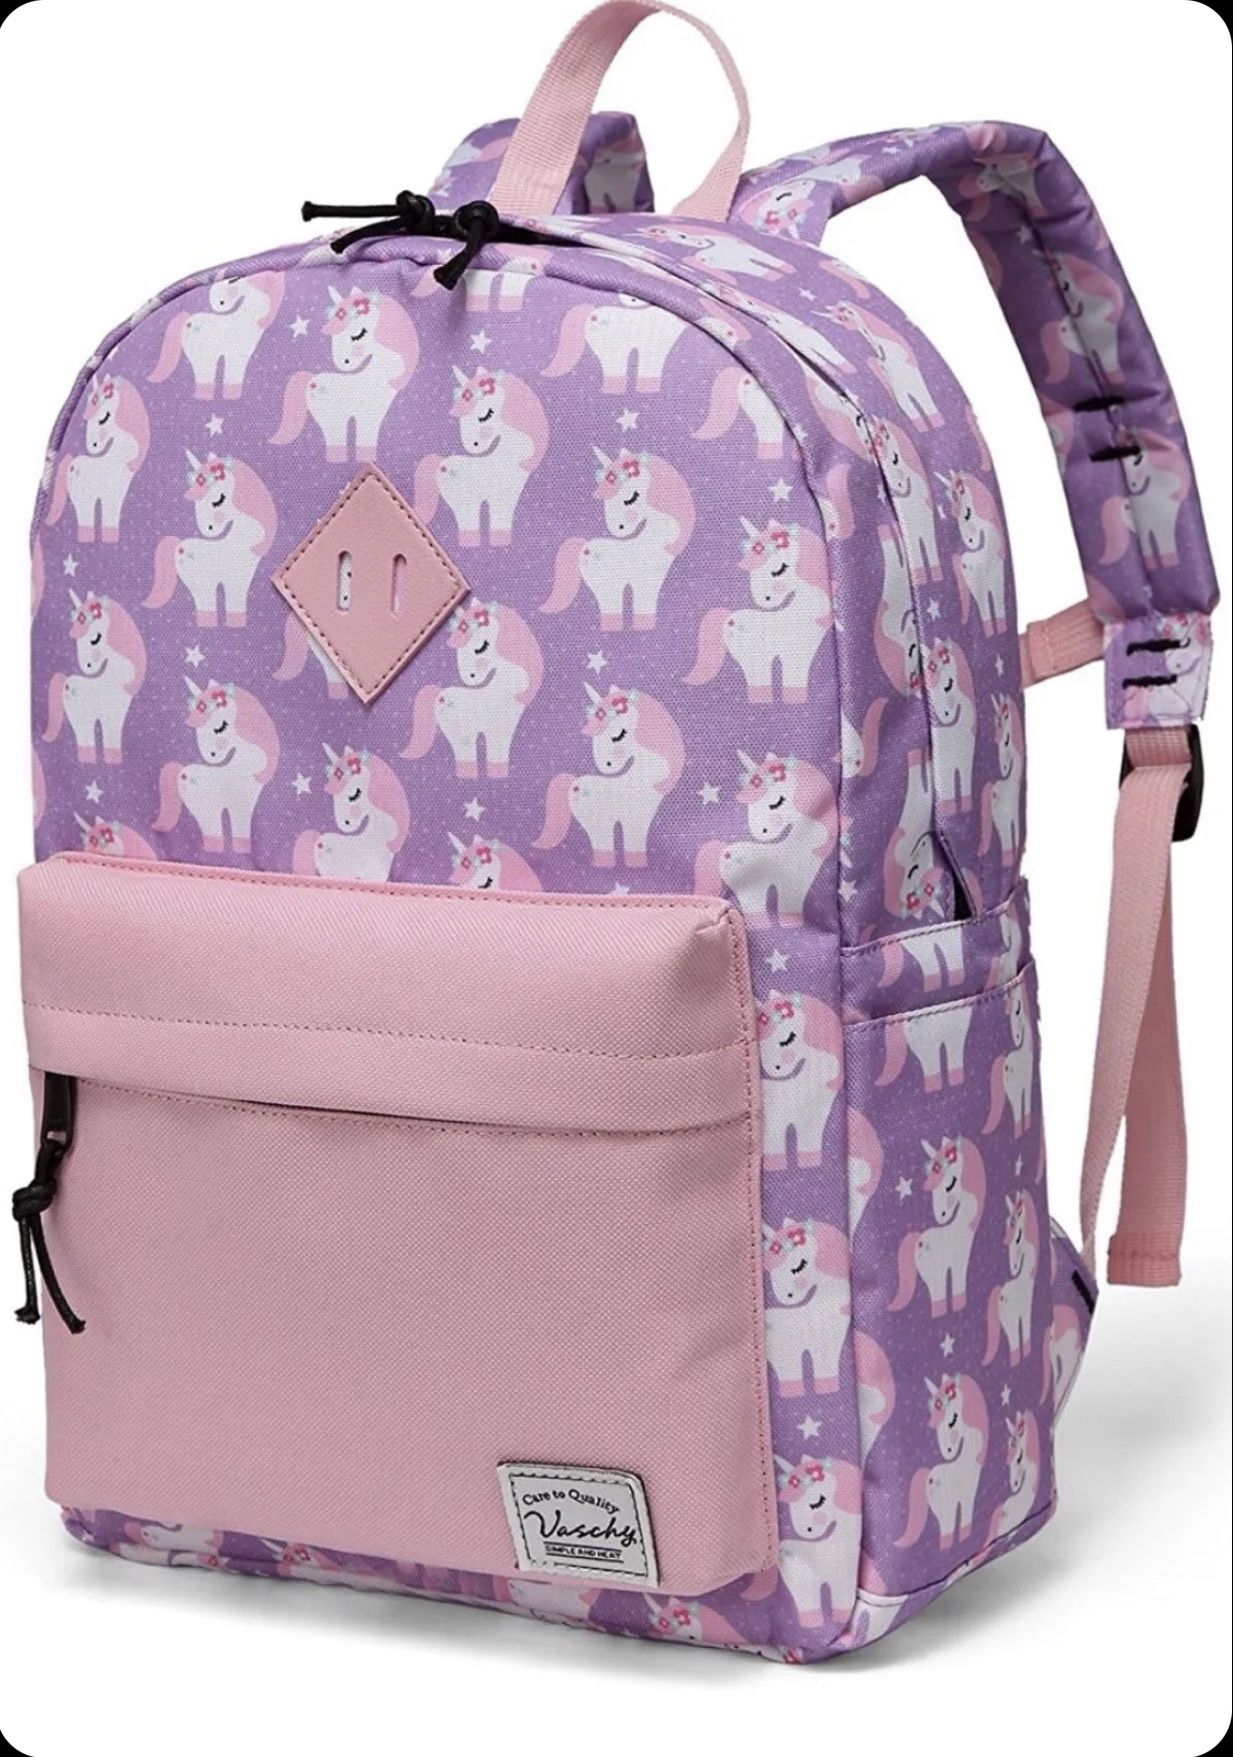 VASCHY girls Unicorn backpack for school, beach outdoor